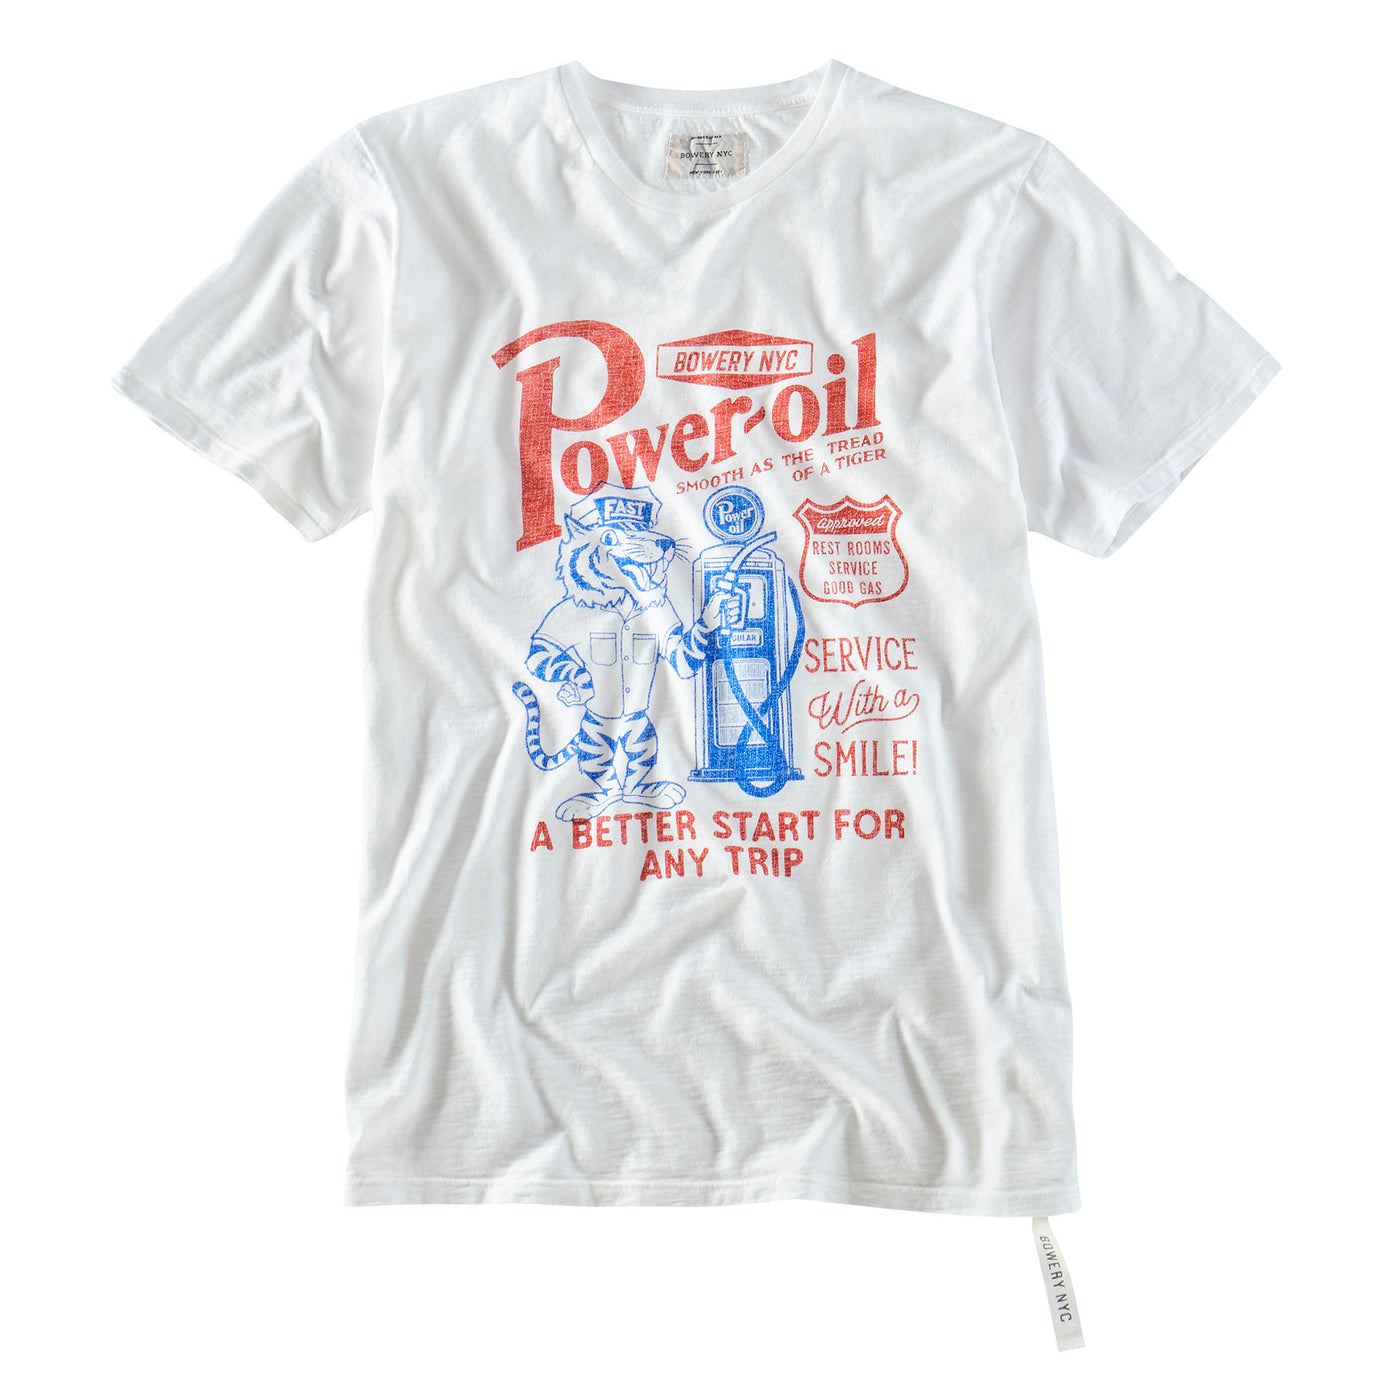 Bowery NYC T-Shirt Poweroil